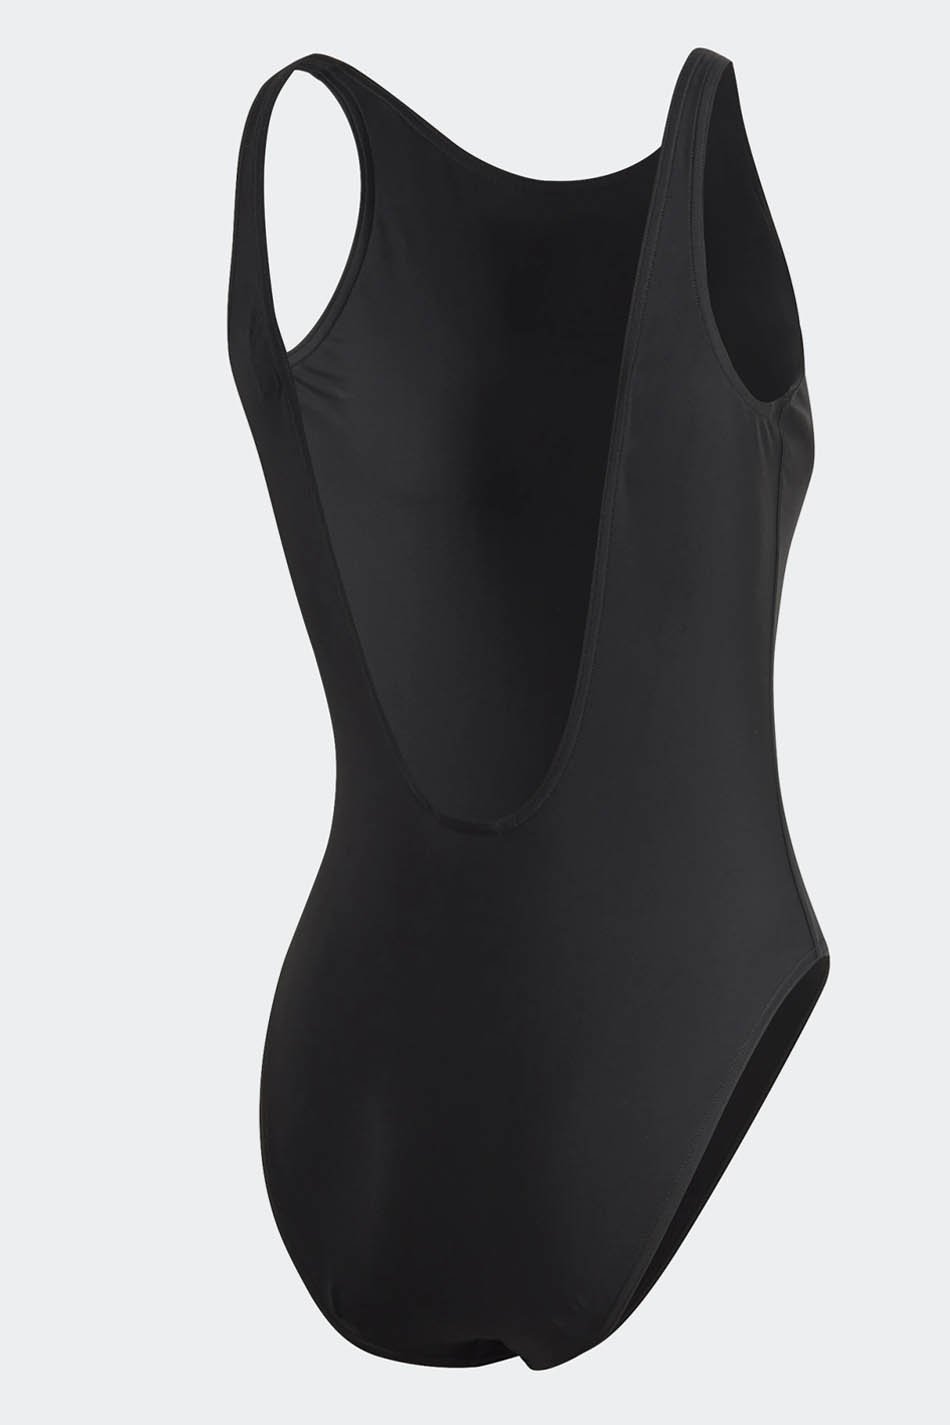 Adidas Trefoil Black Swimsuit